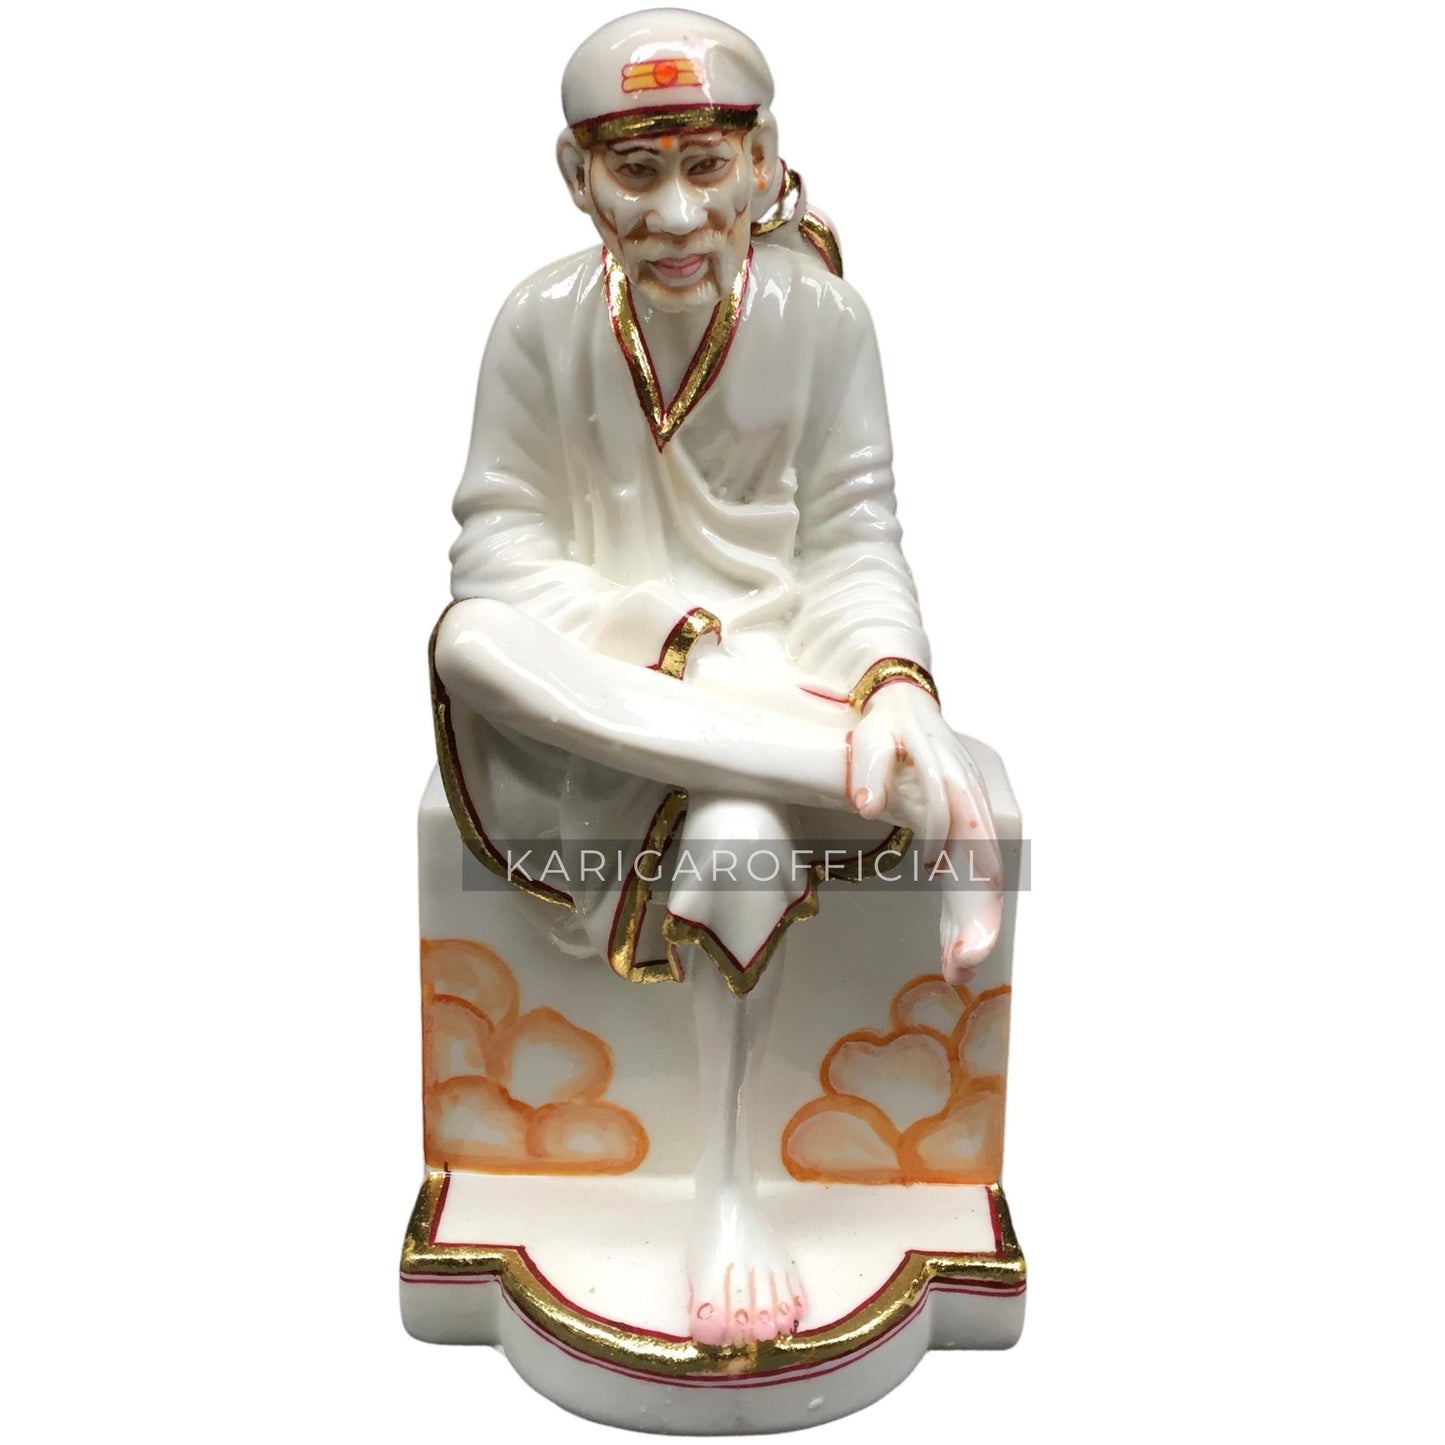 Sai baba Statue, White Marble Satya Sai Murti, Large 9 inches Sai baba idol, The Selfless God Hindu Divine Sai baba figurine, Shirdi Sai Baba Sculpture, Sri DattaGuru Home Temple Housewarming Gifts